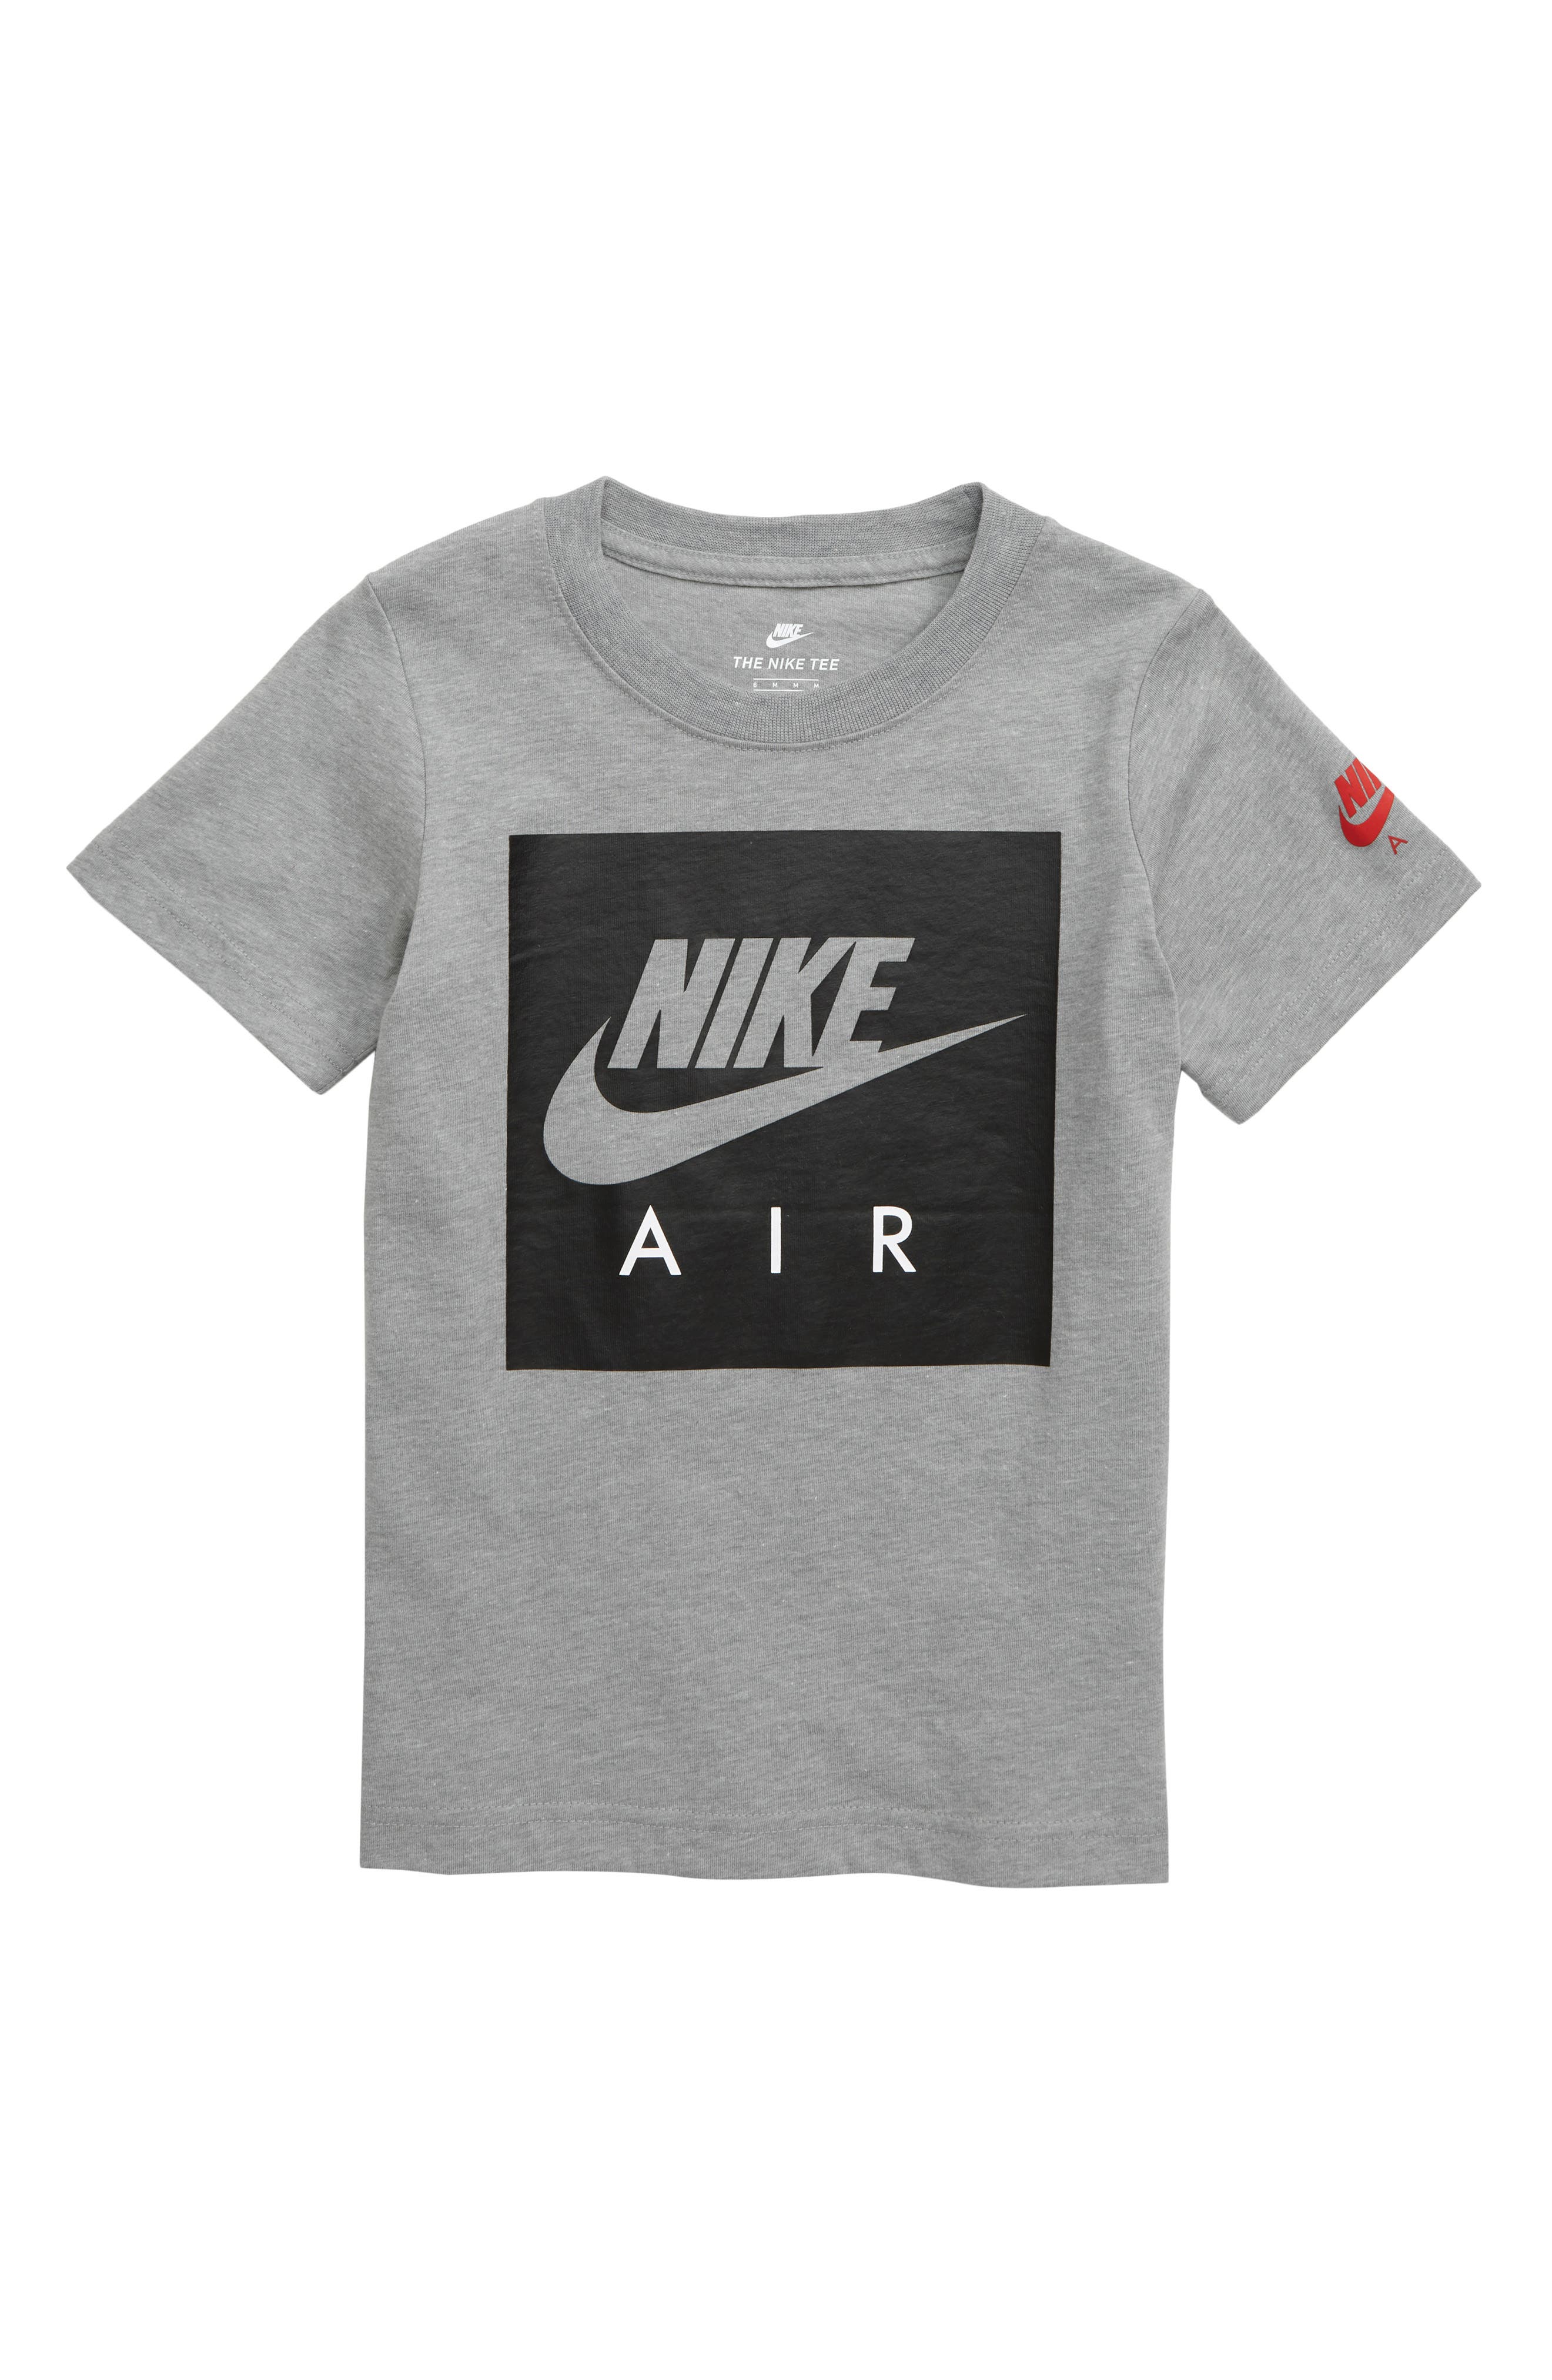 Nike Air Box Logo T-Shirt (Toddler Boys 